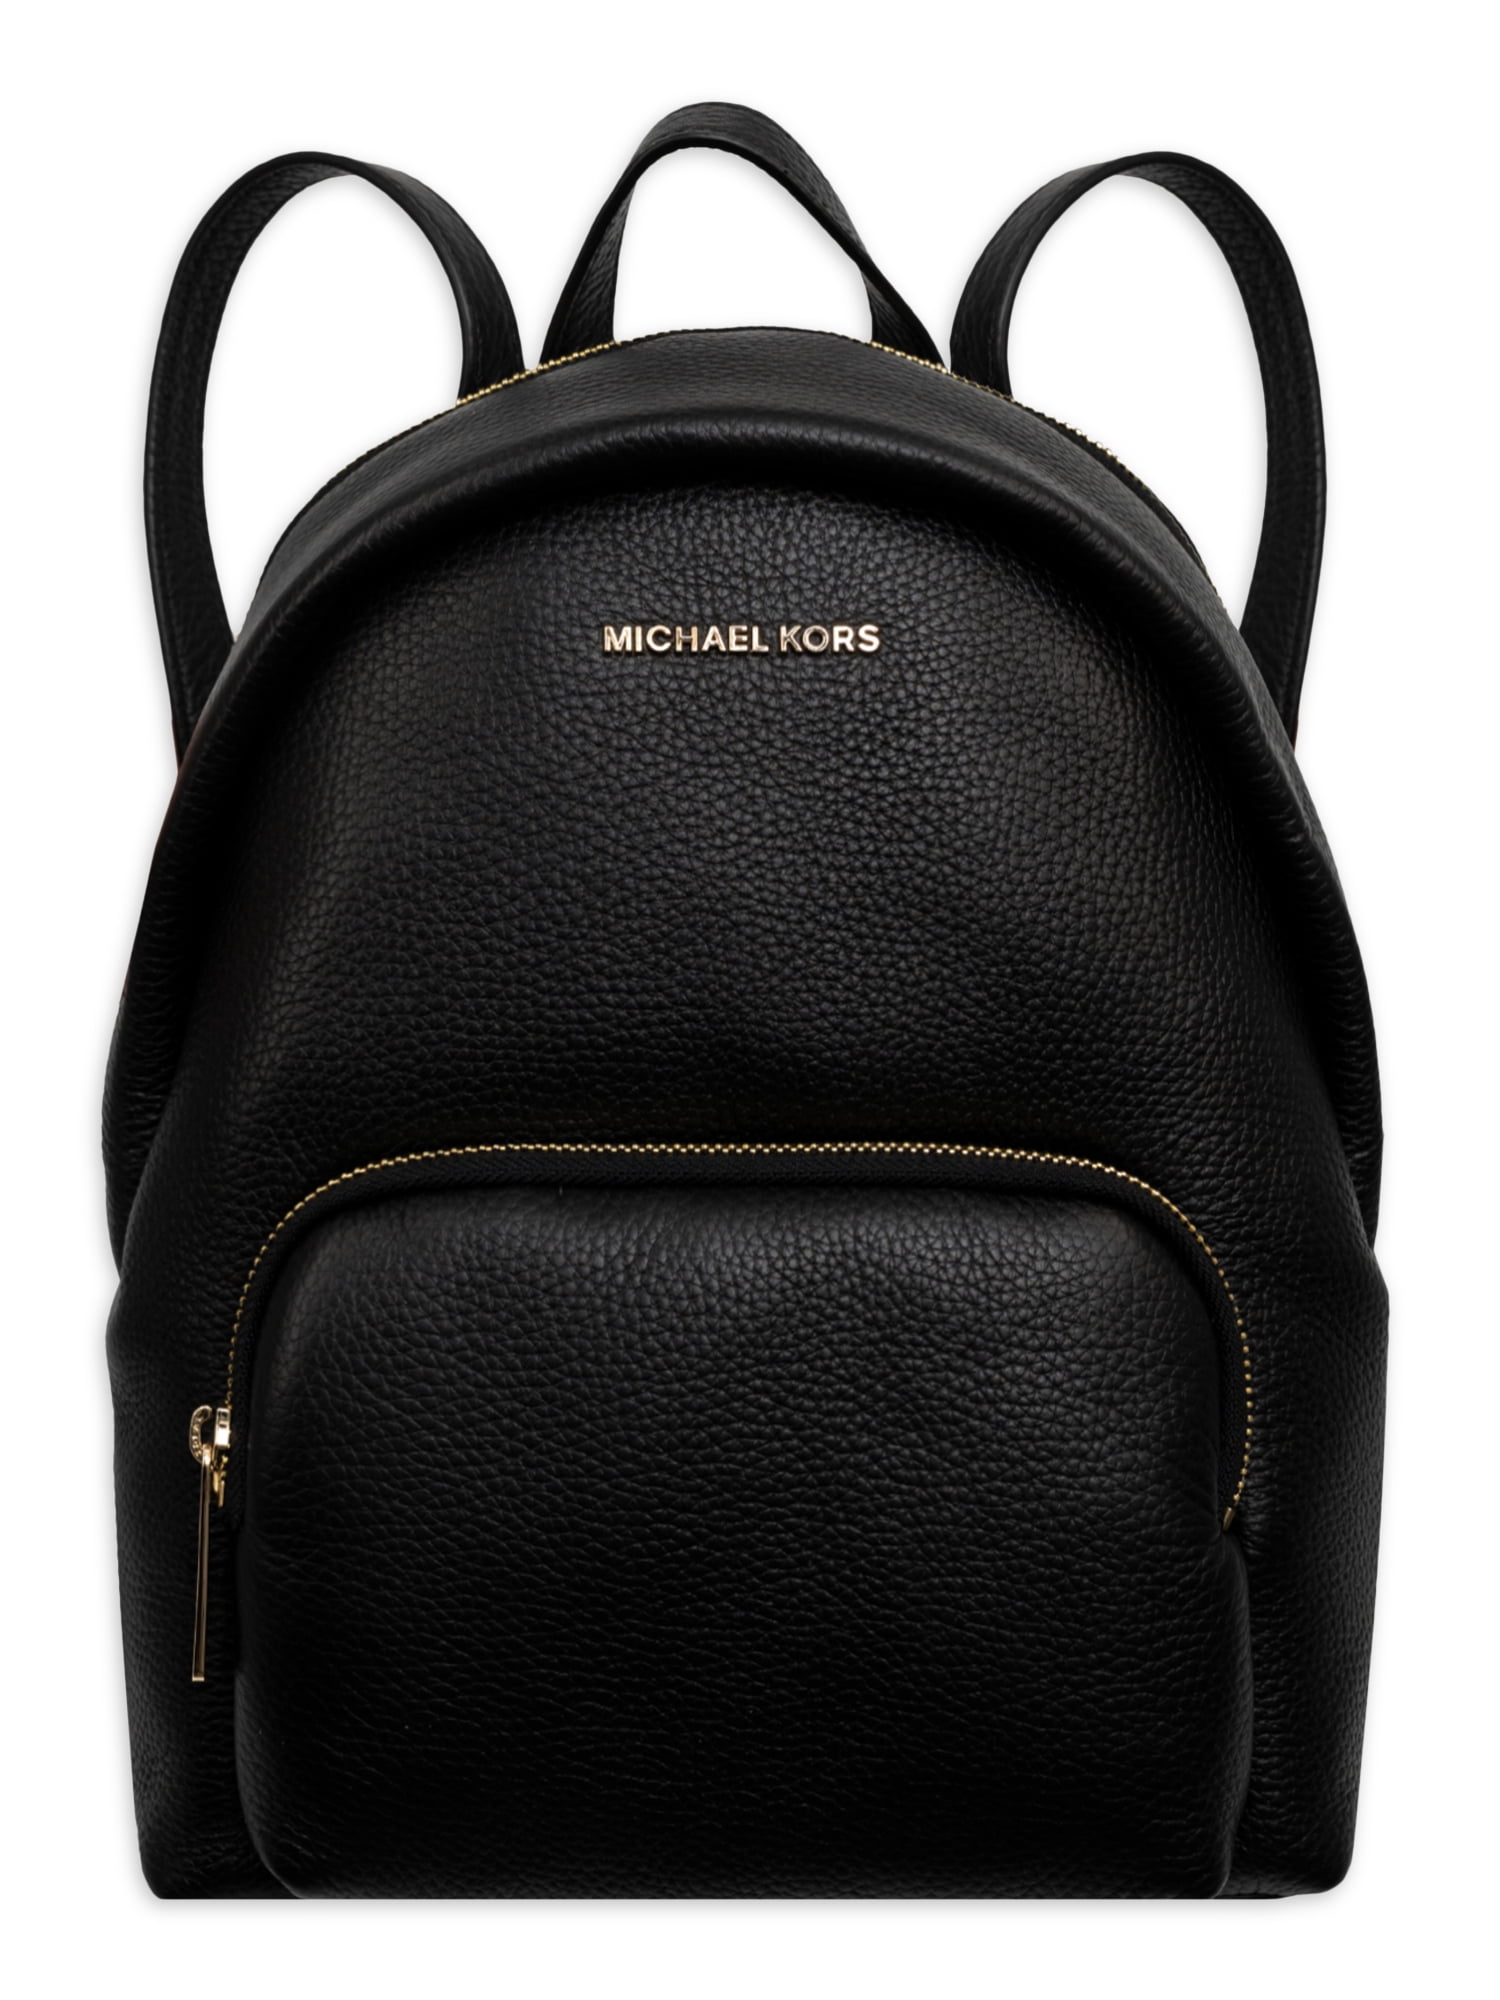 Michael Kors Women's Erin Medium Pebbled Leather Backpack - Black